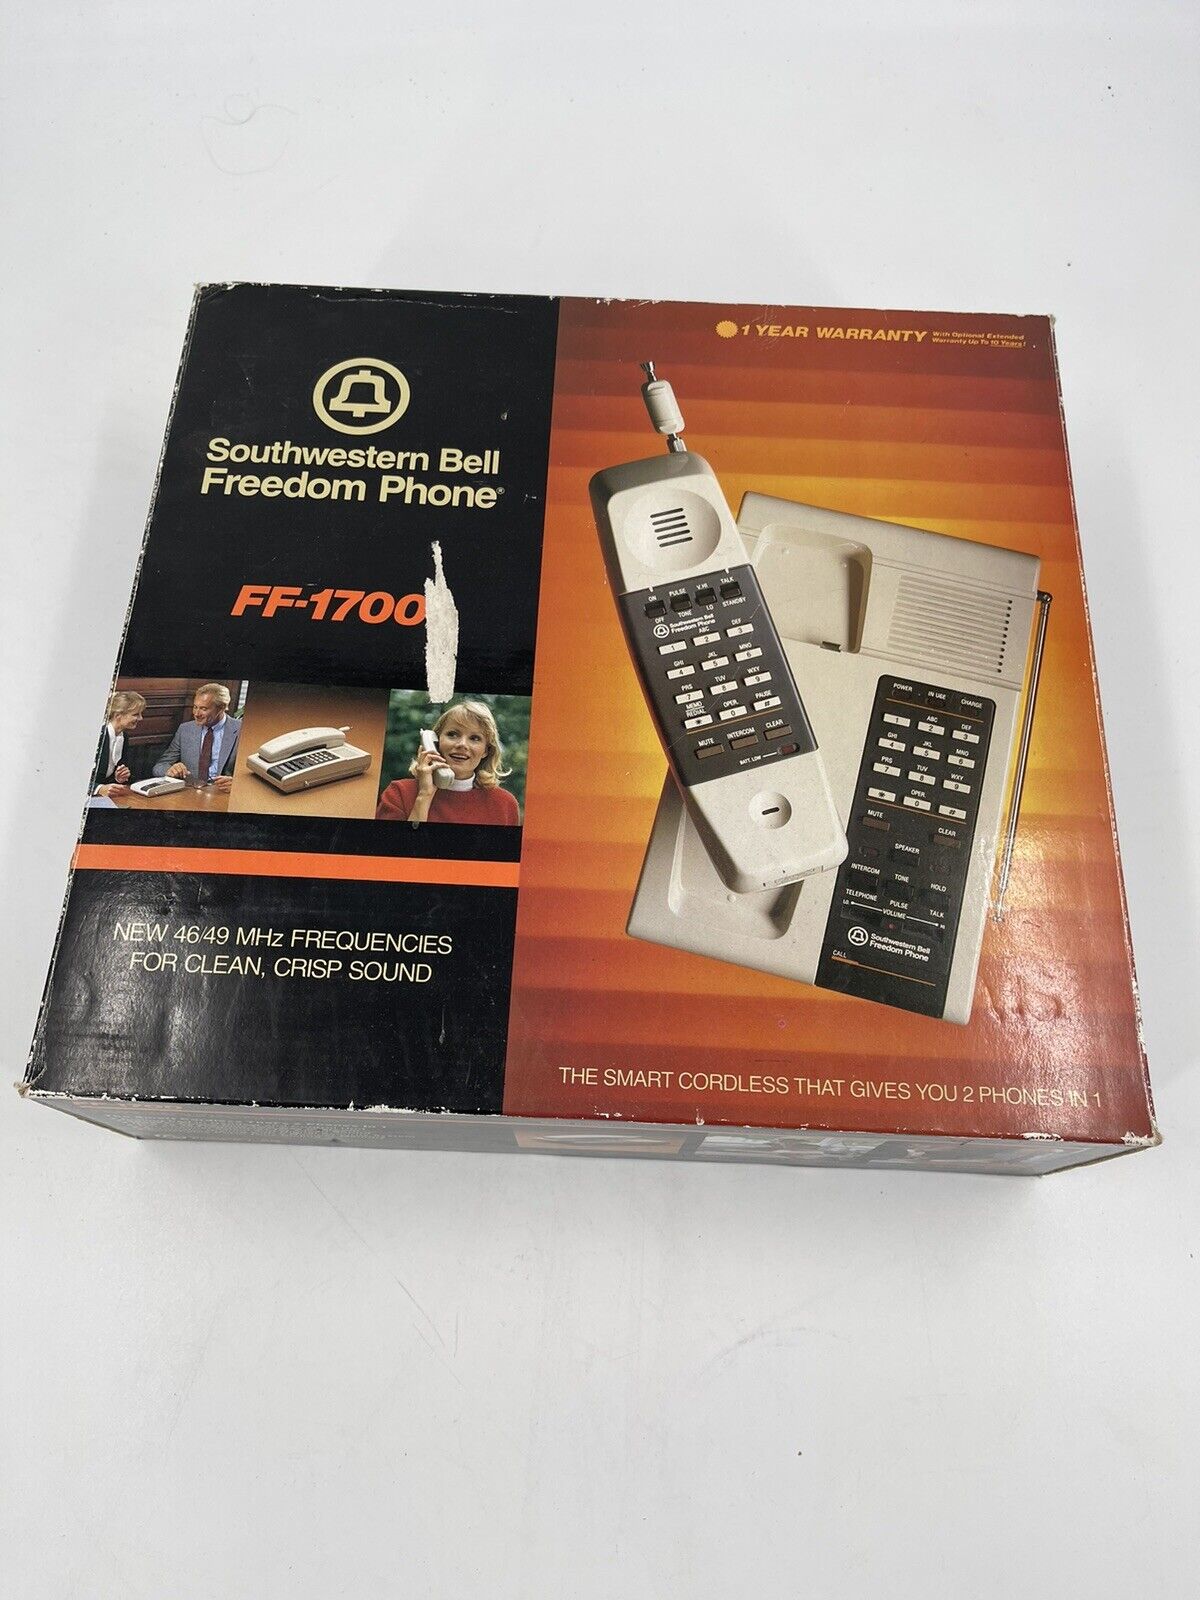 VTG Southwestern Bell Freedom Phone FF-1700 Cordless Landline W/Box